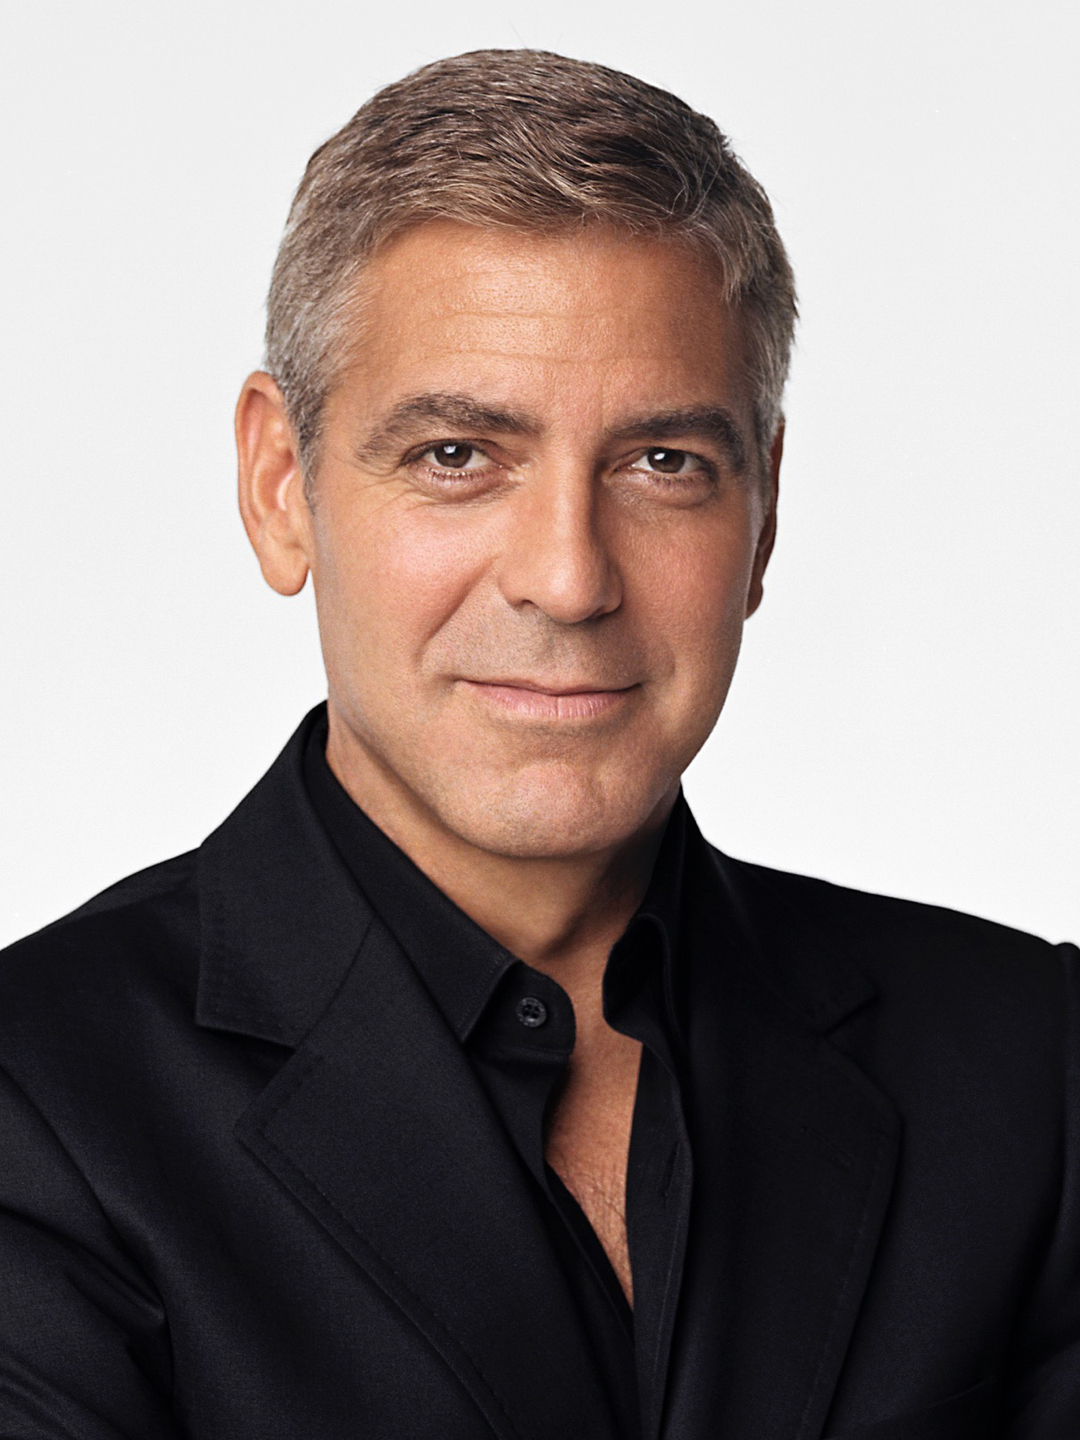 George Clooney life path